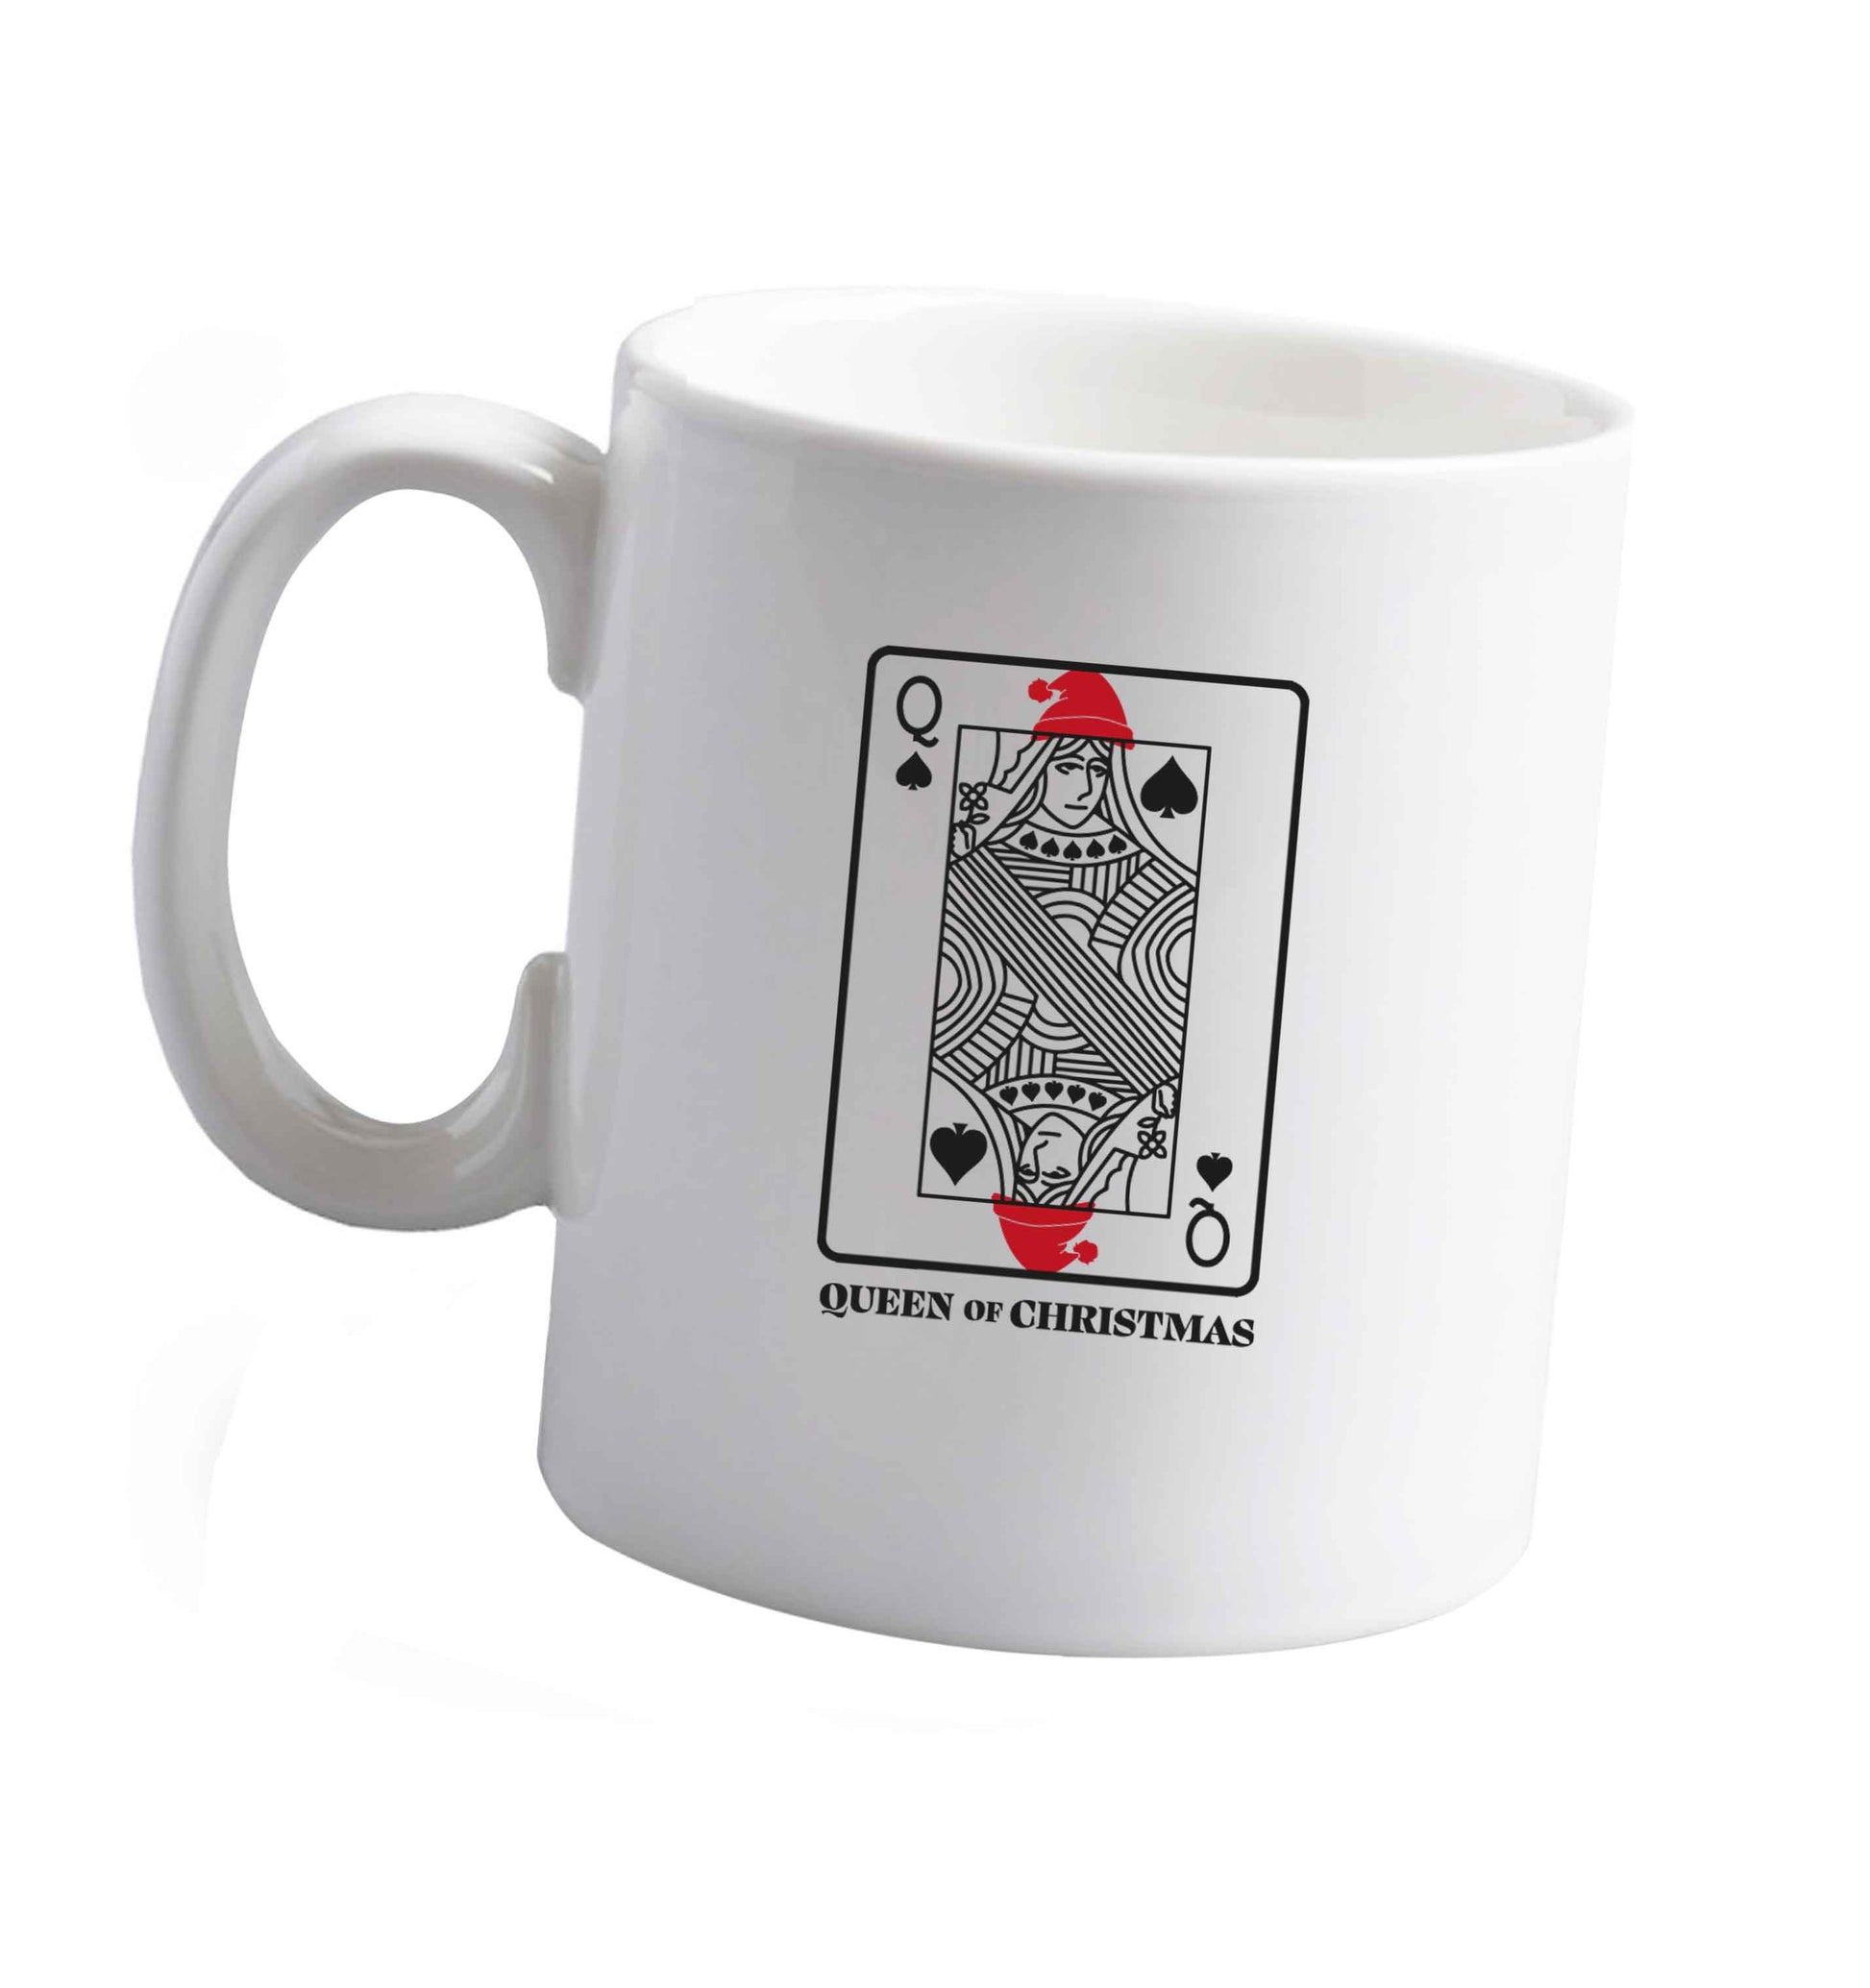 10 oz Queen of christmas ceramic mug right handed